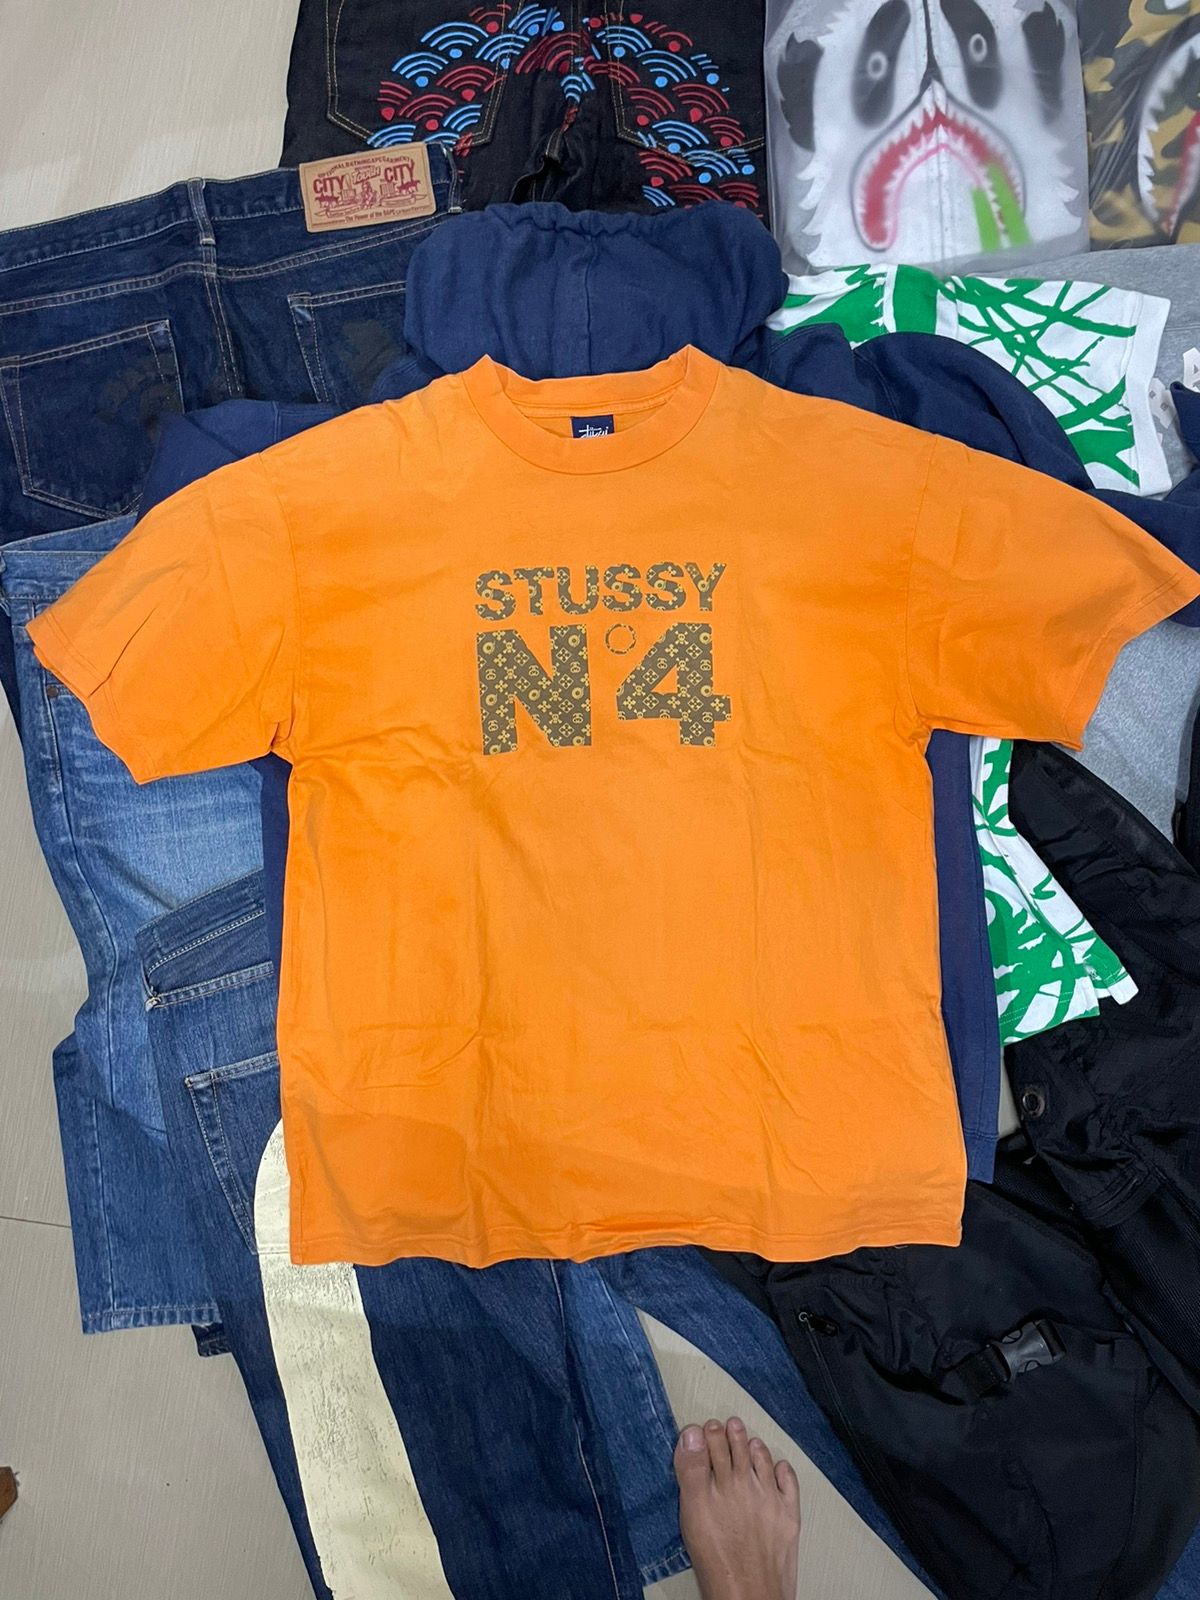 stussy louis vuitton t shirt